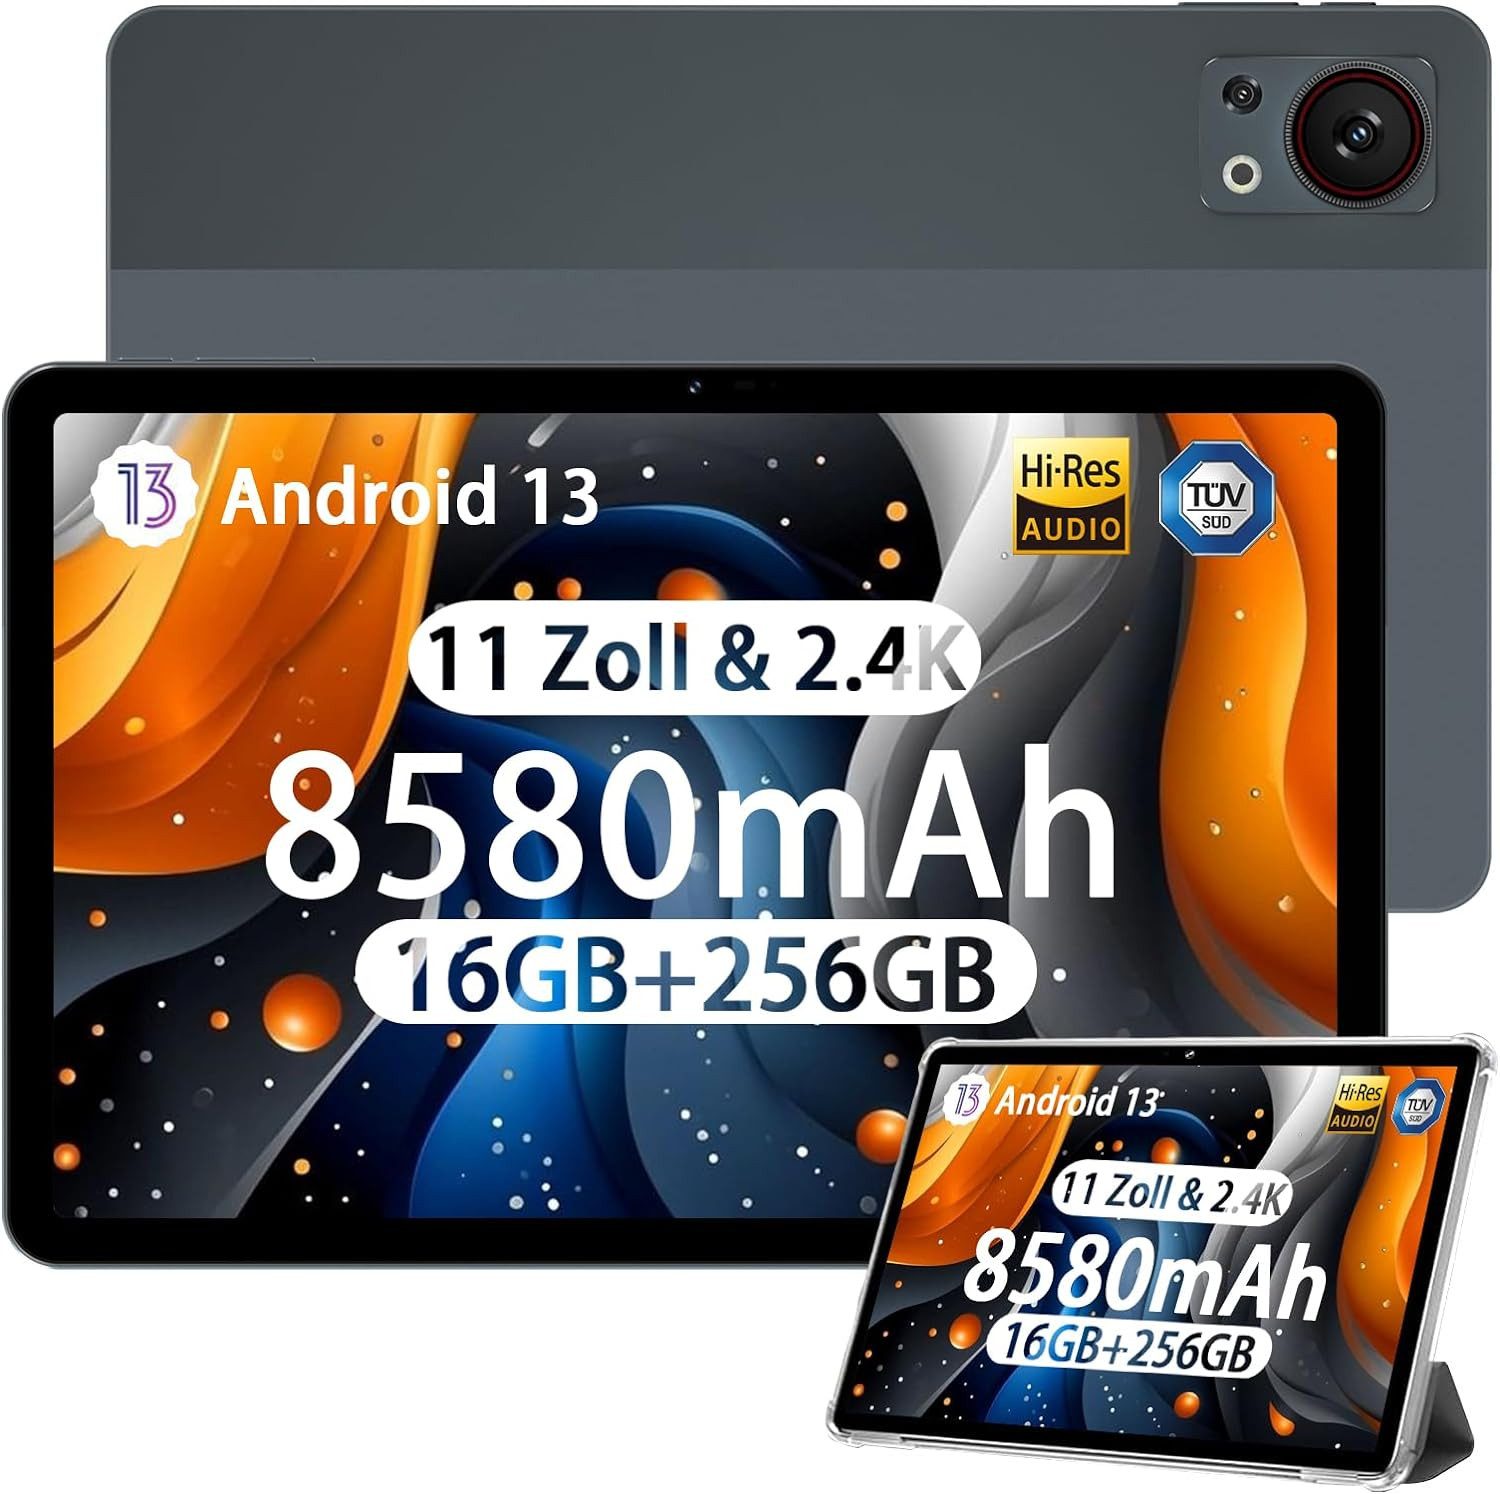 DOOGEE 8580mAh 13MP+8MP Kamera/BT5/Widevine L1/Type-C Gaming Tablet (11